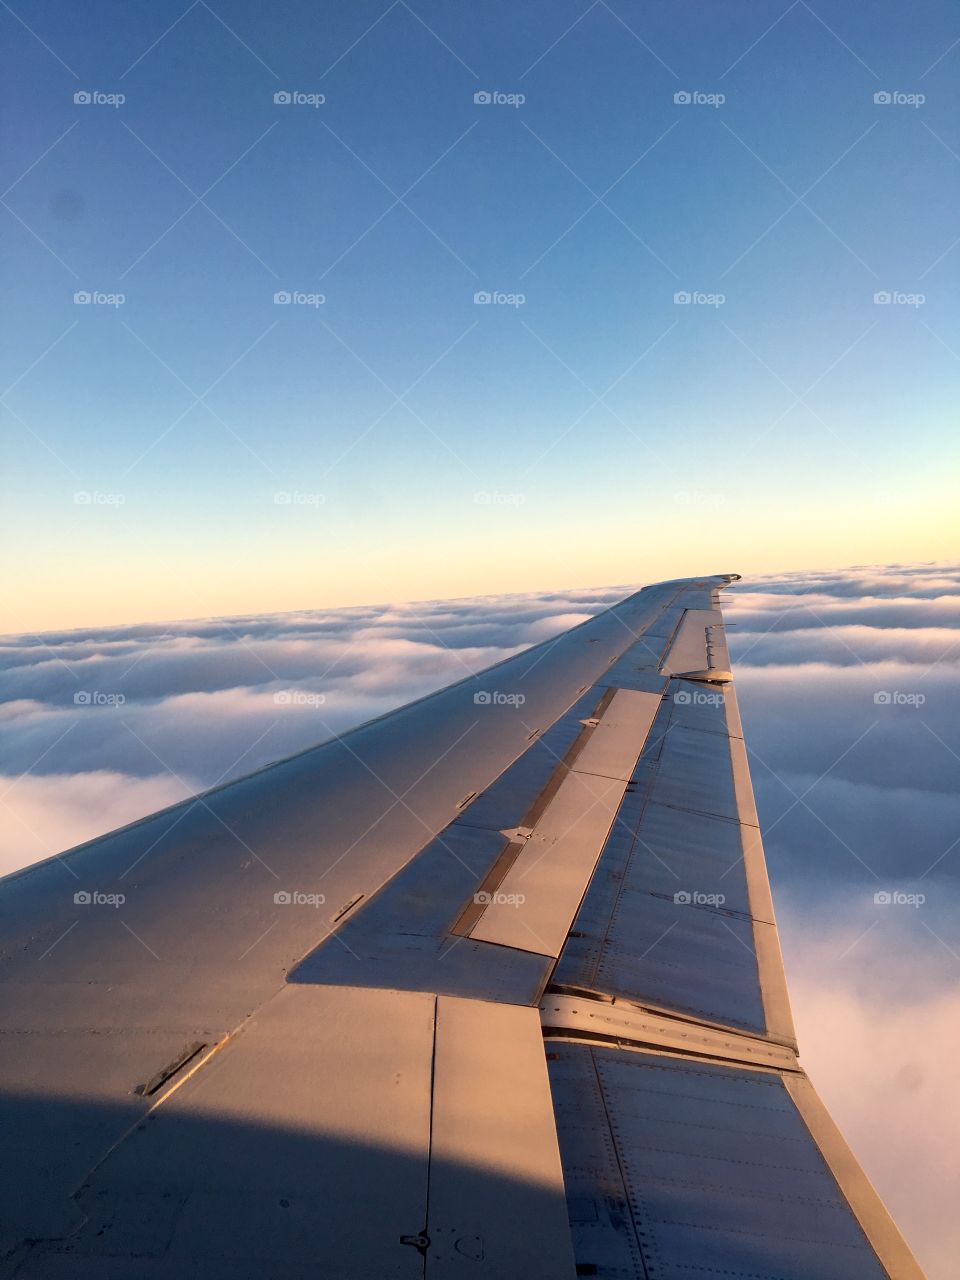 No Person, Sky, Travel, Airplane, Sun